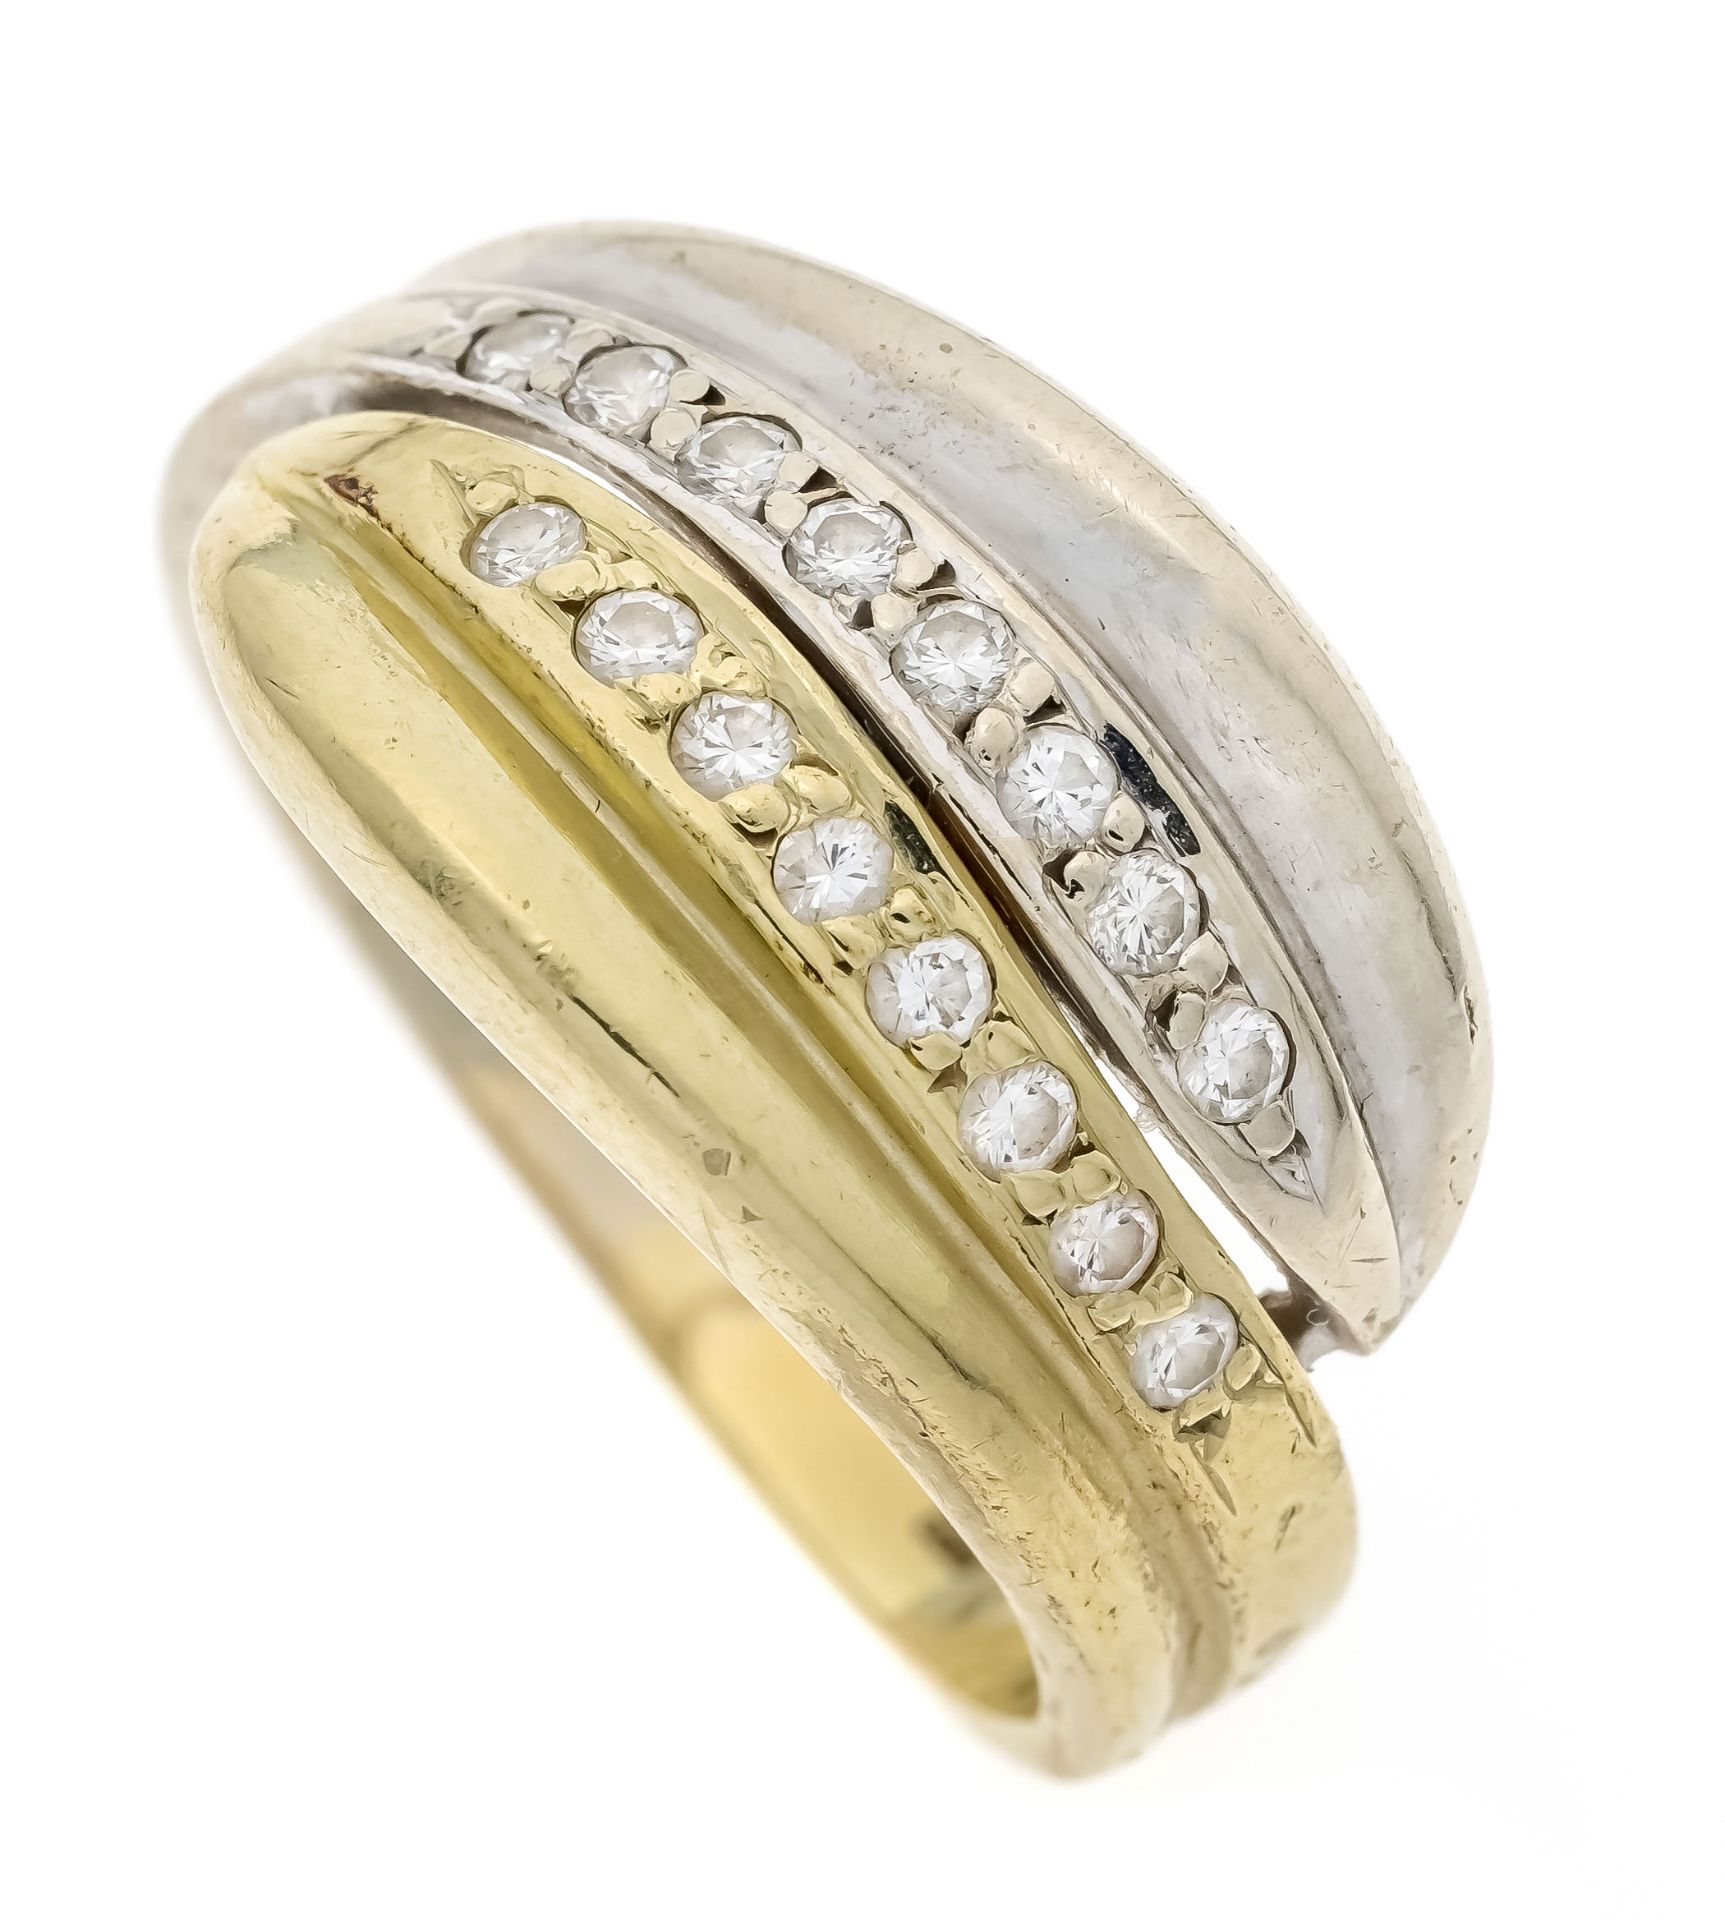 Brilliant ring GG/WG 585/000 with 16 brilliant-cut diamonds, total 0.19 ct W/VS-SI, RG 57, 5.8 g